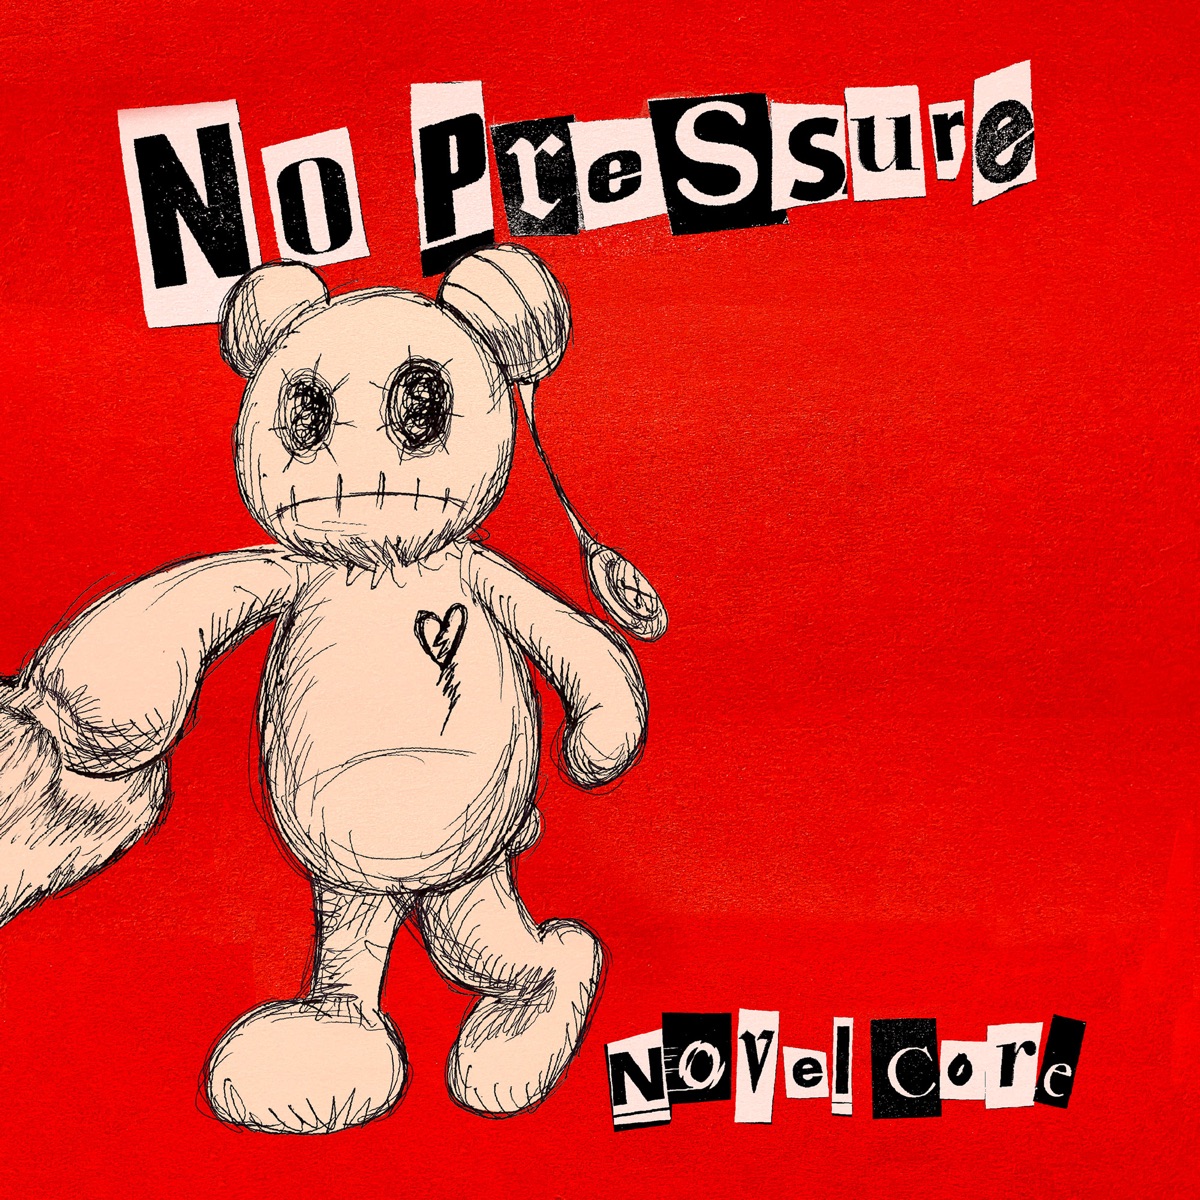 Cover art for『Novel Core - Imaginative Fantasista』from the release『No Pressure』